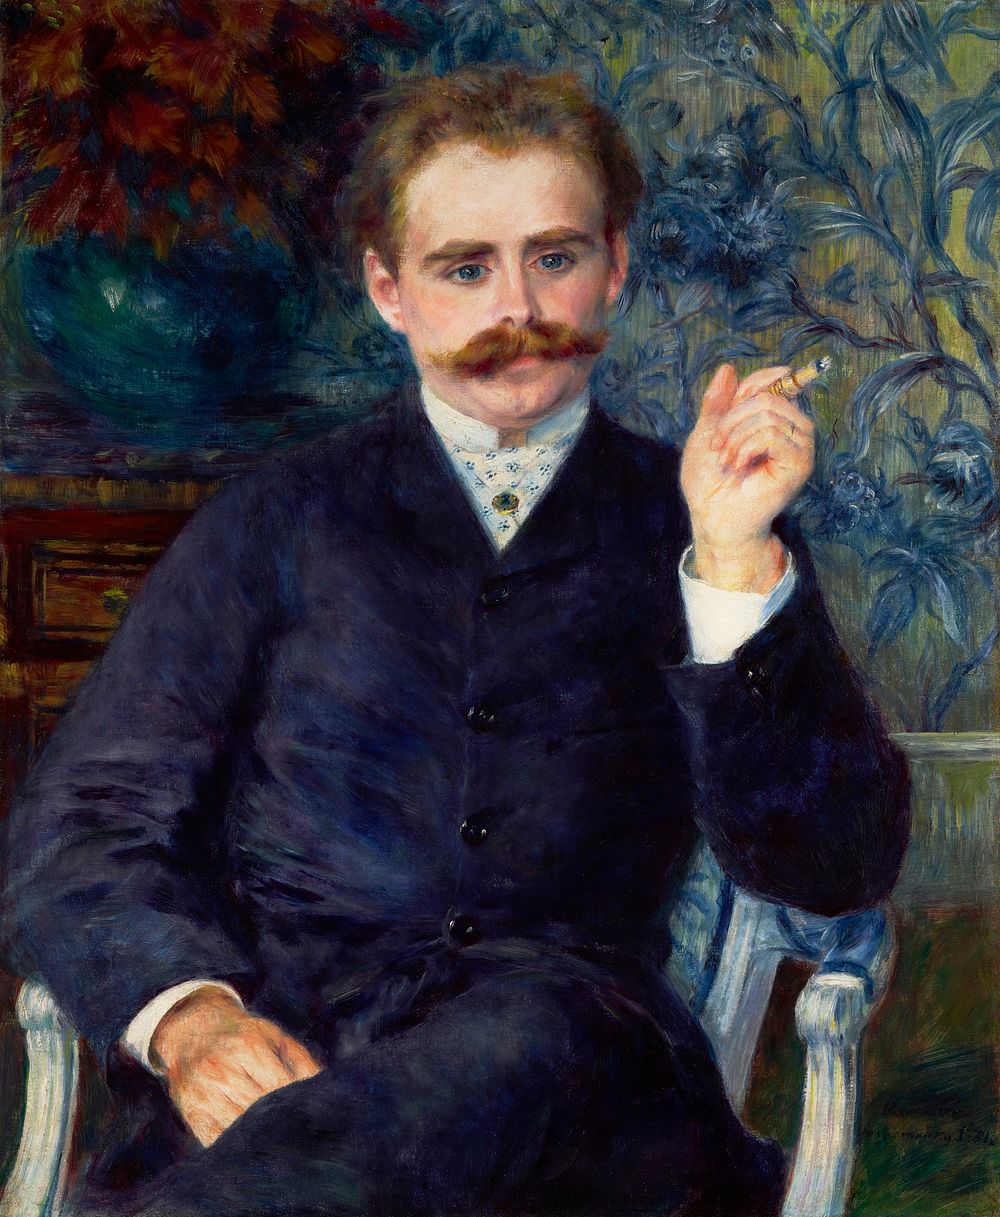 Albert Cahen d'Anvers (1881) by Pierre-Auguste Renoir. Original from The Getty. Digitally enhanced by rawpixel.